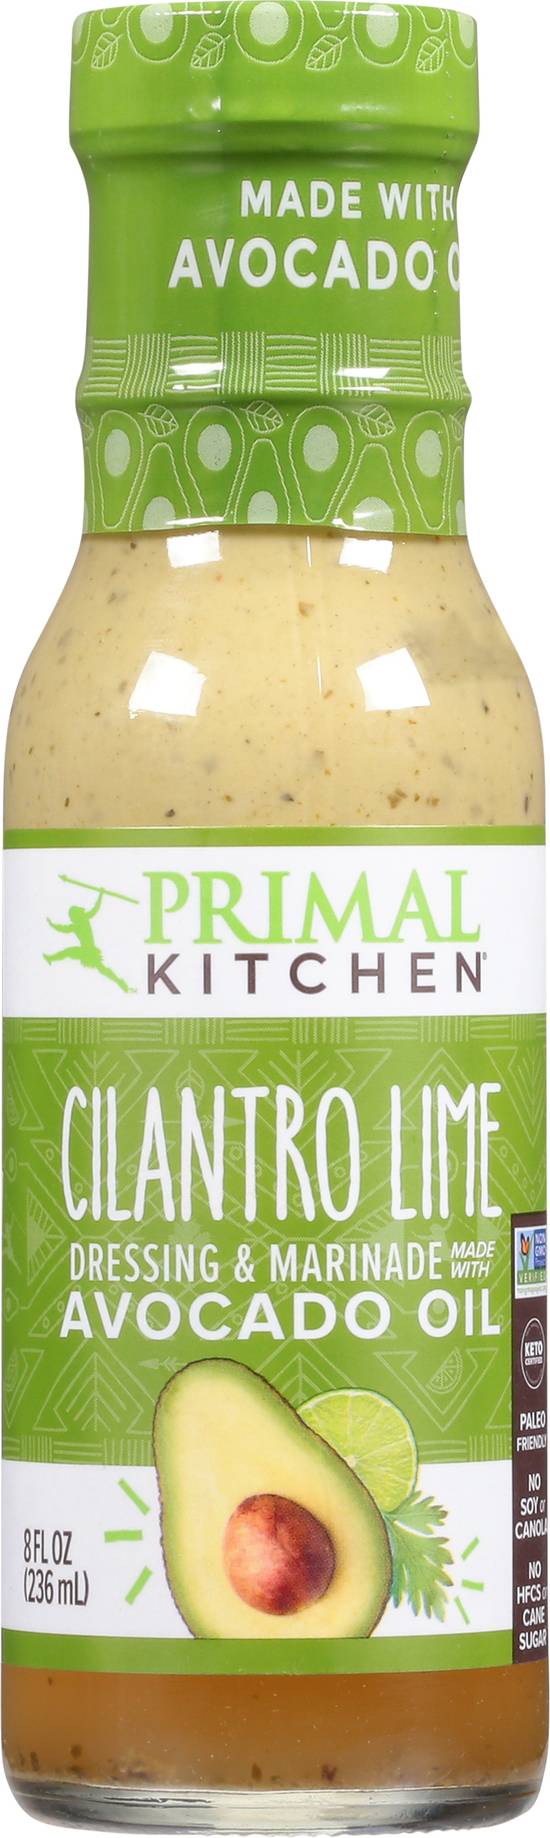 Primal Kitchen Cilantro Lime Dressing & Marinade (8 fl oz)